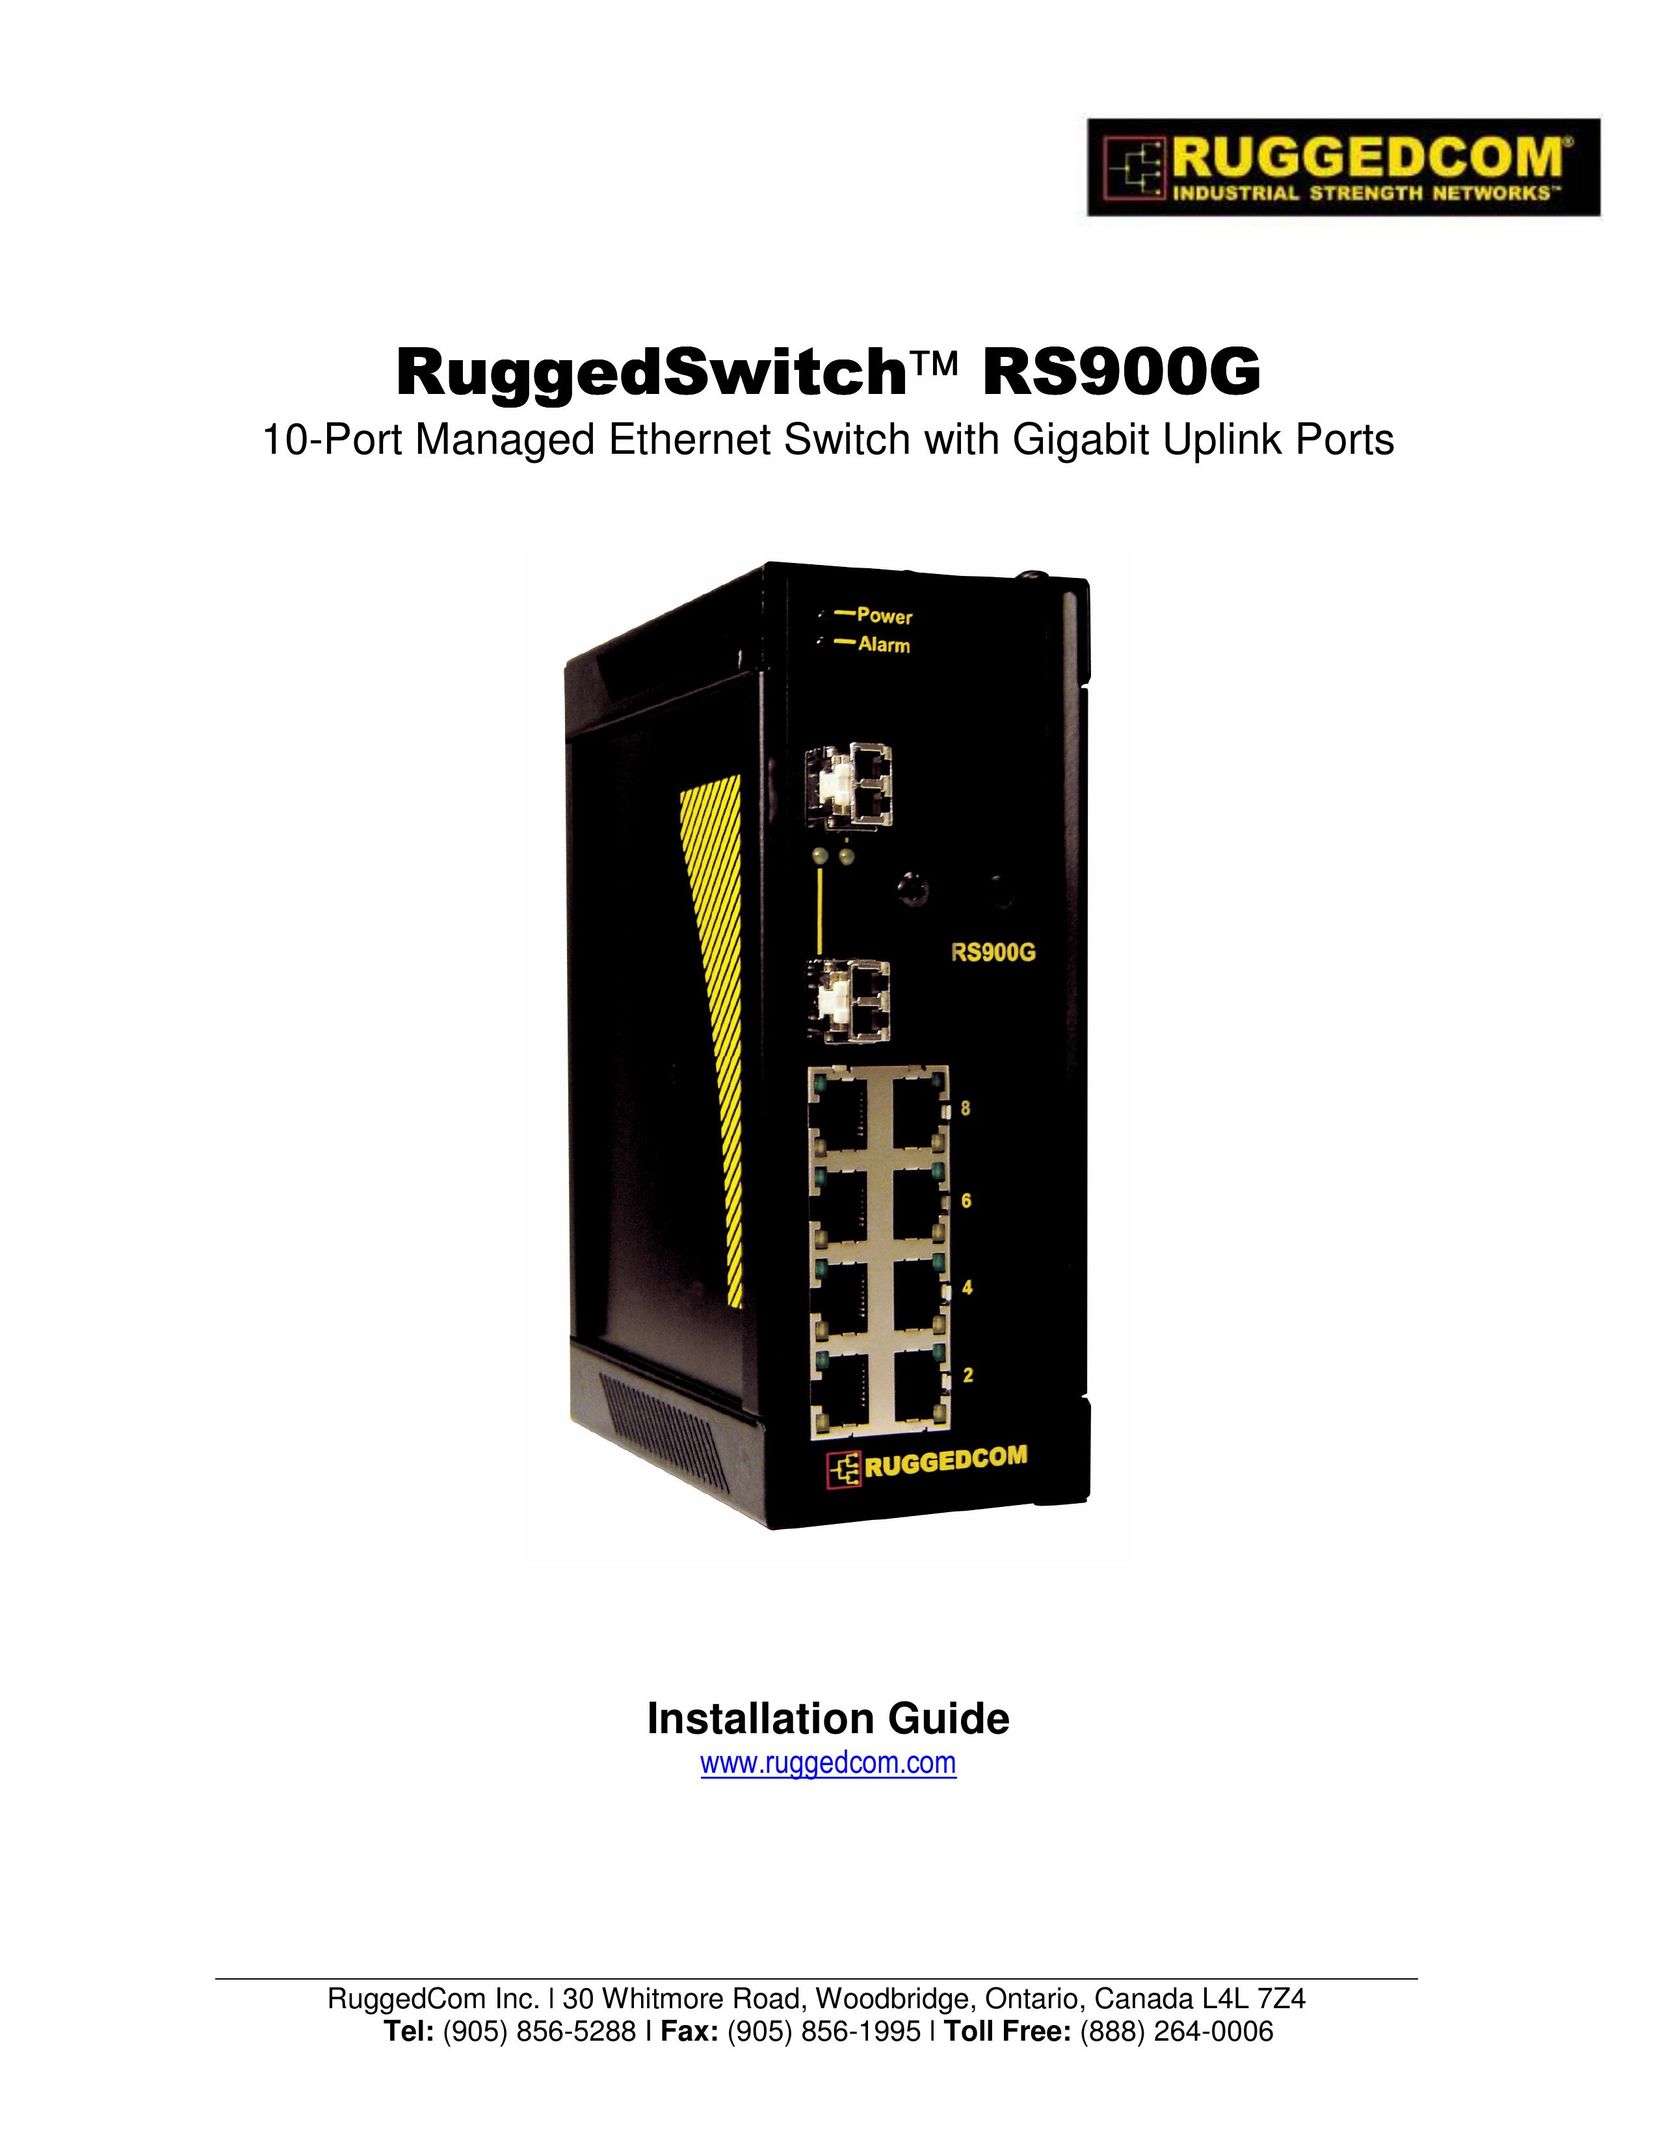 RuggedCom RS900G Switch User Manual